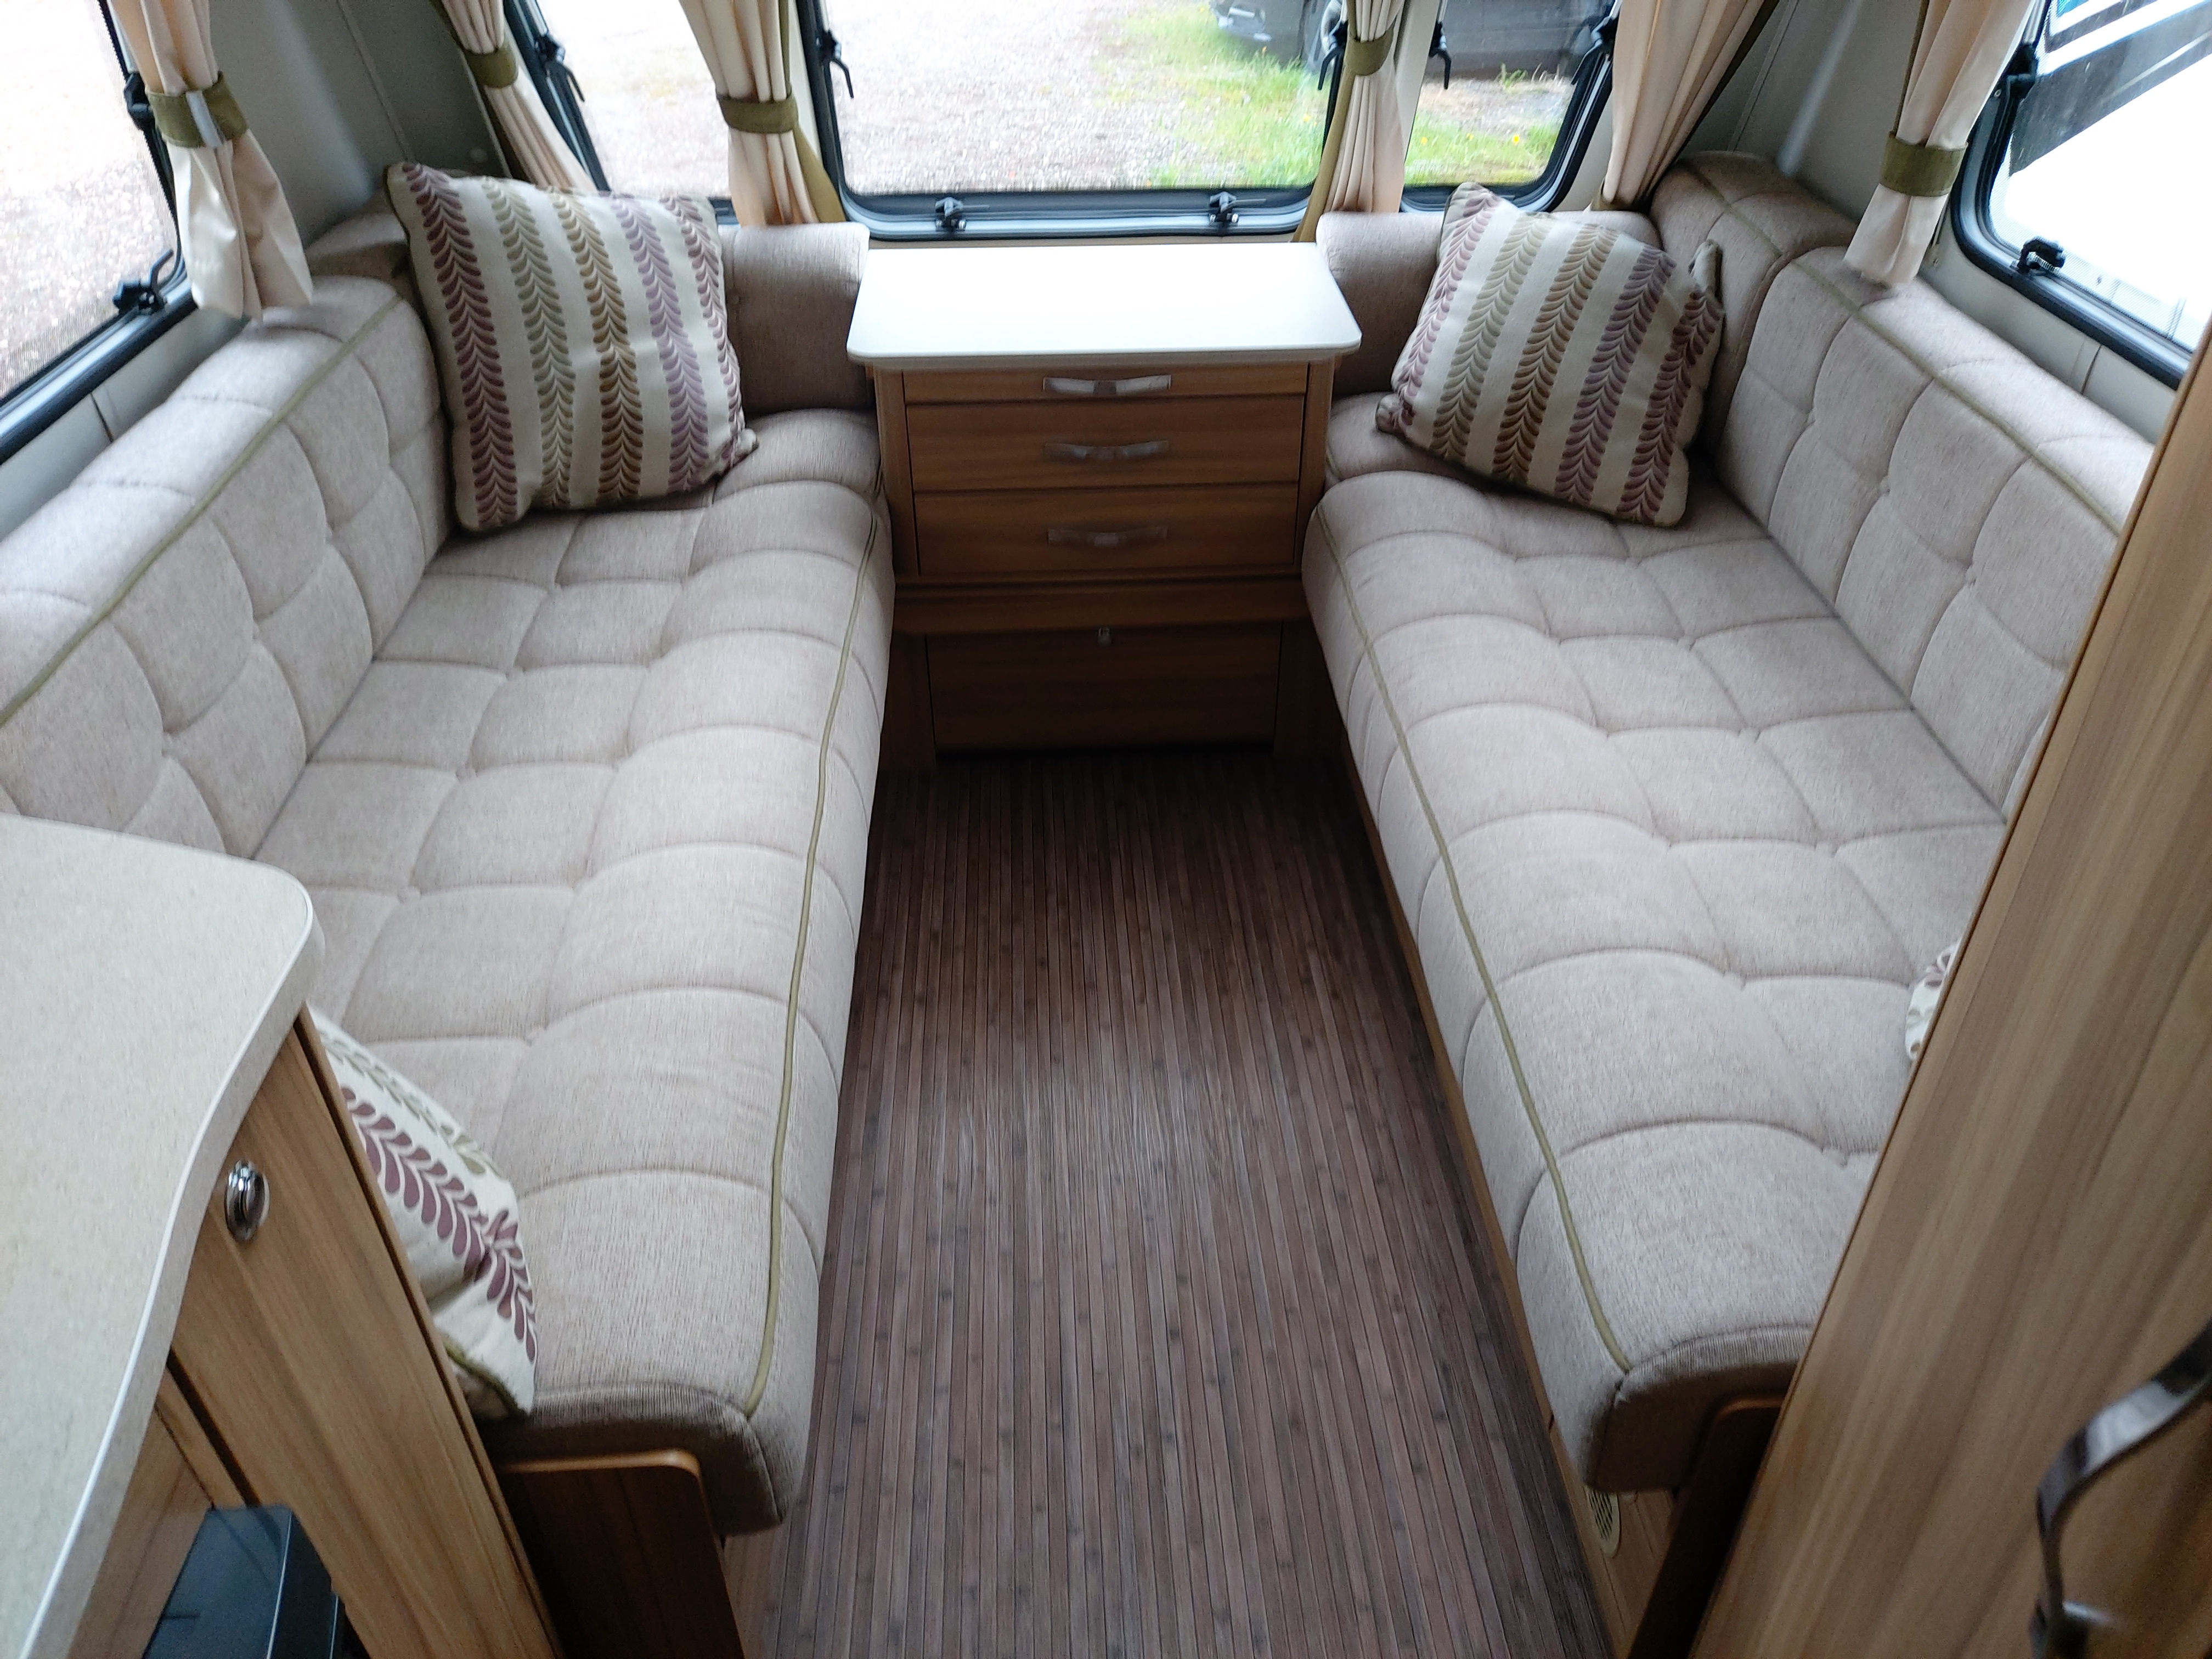 2014 Elddis Rambler 18 5 Berth Side W/Room Caravan, Motor Mover, Solar